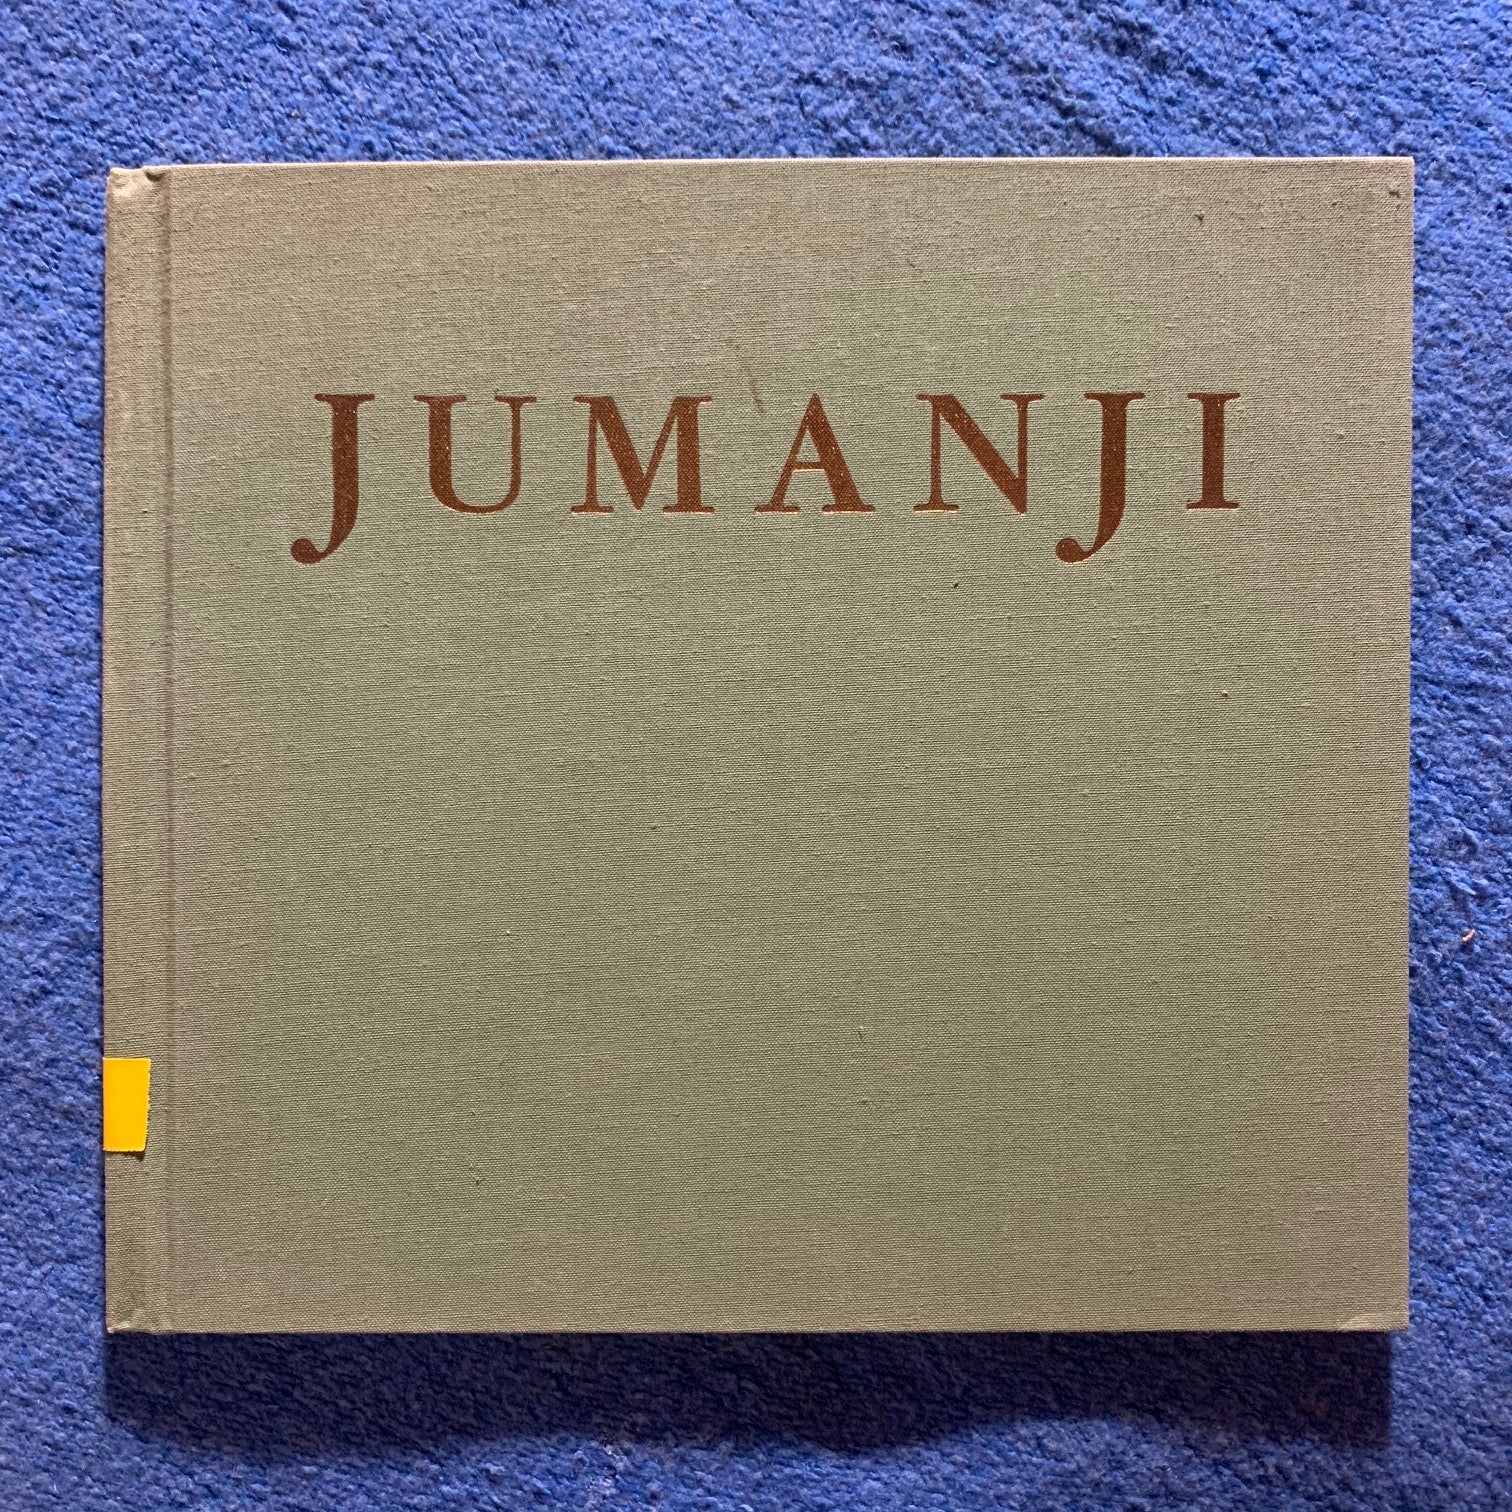 Jumanji by Chris Van Allsburg